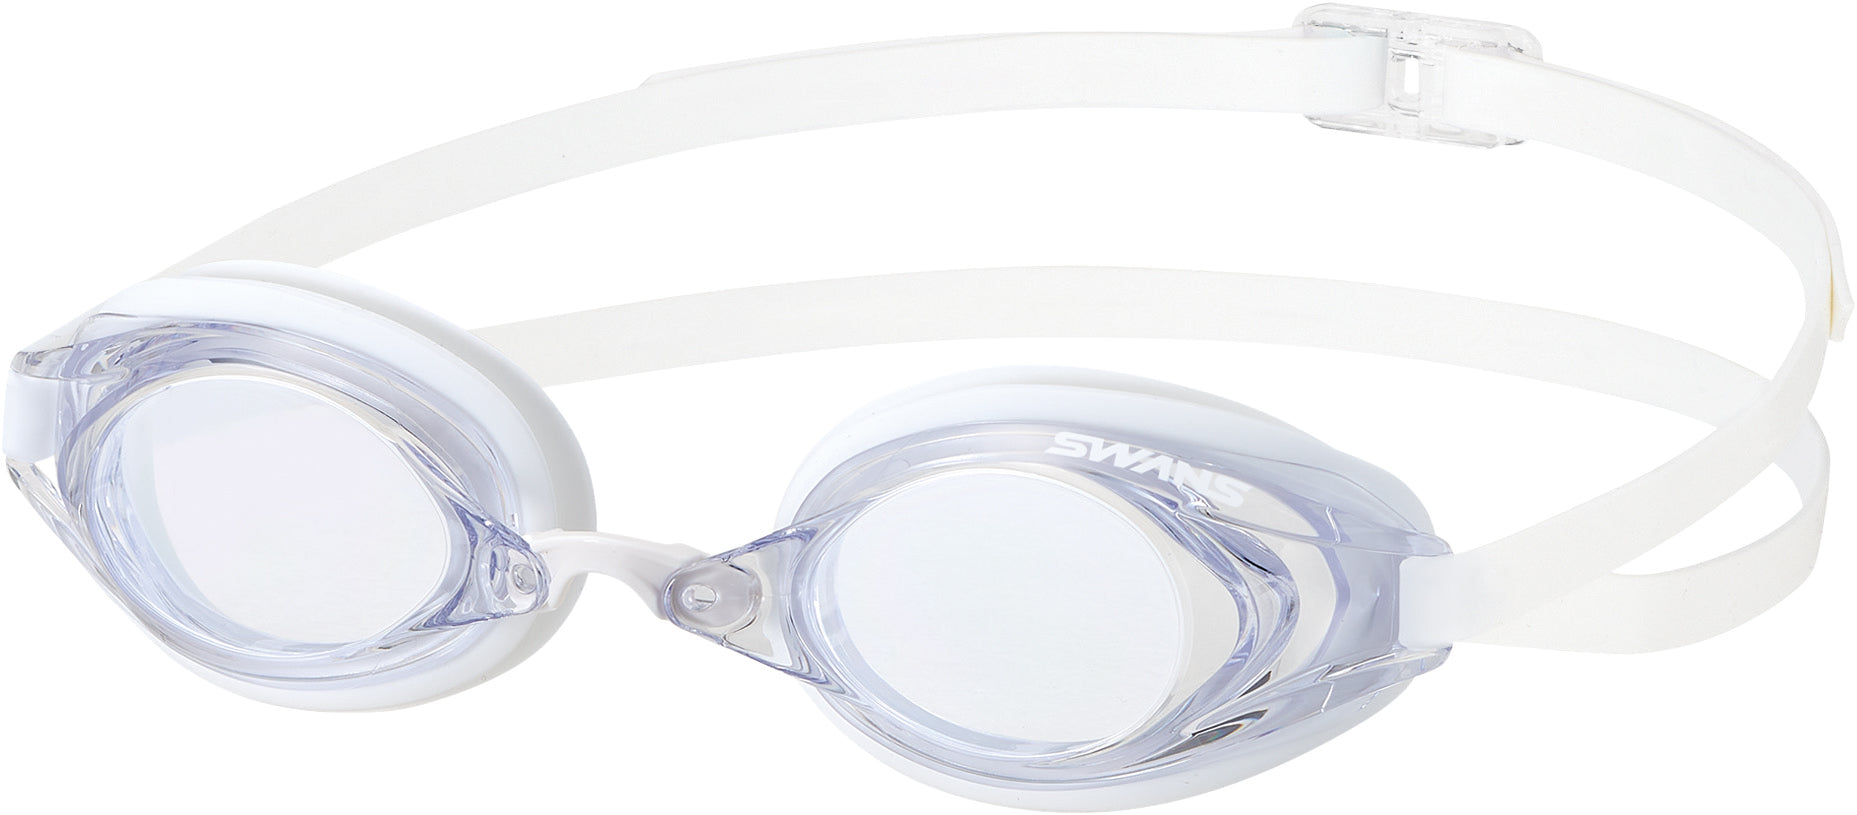 SR2 Goggles White/Clear